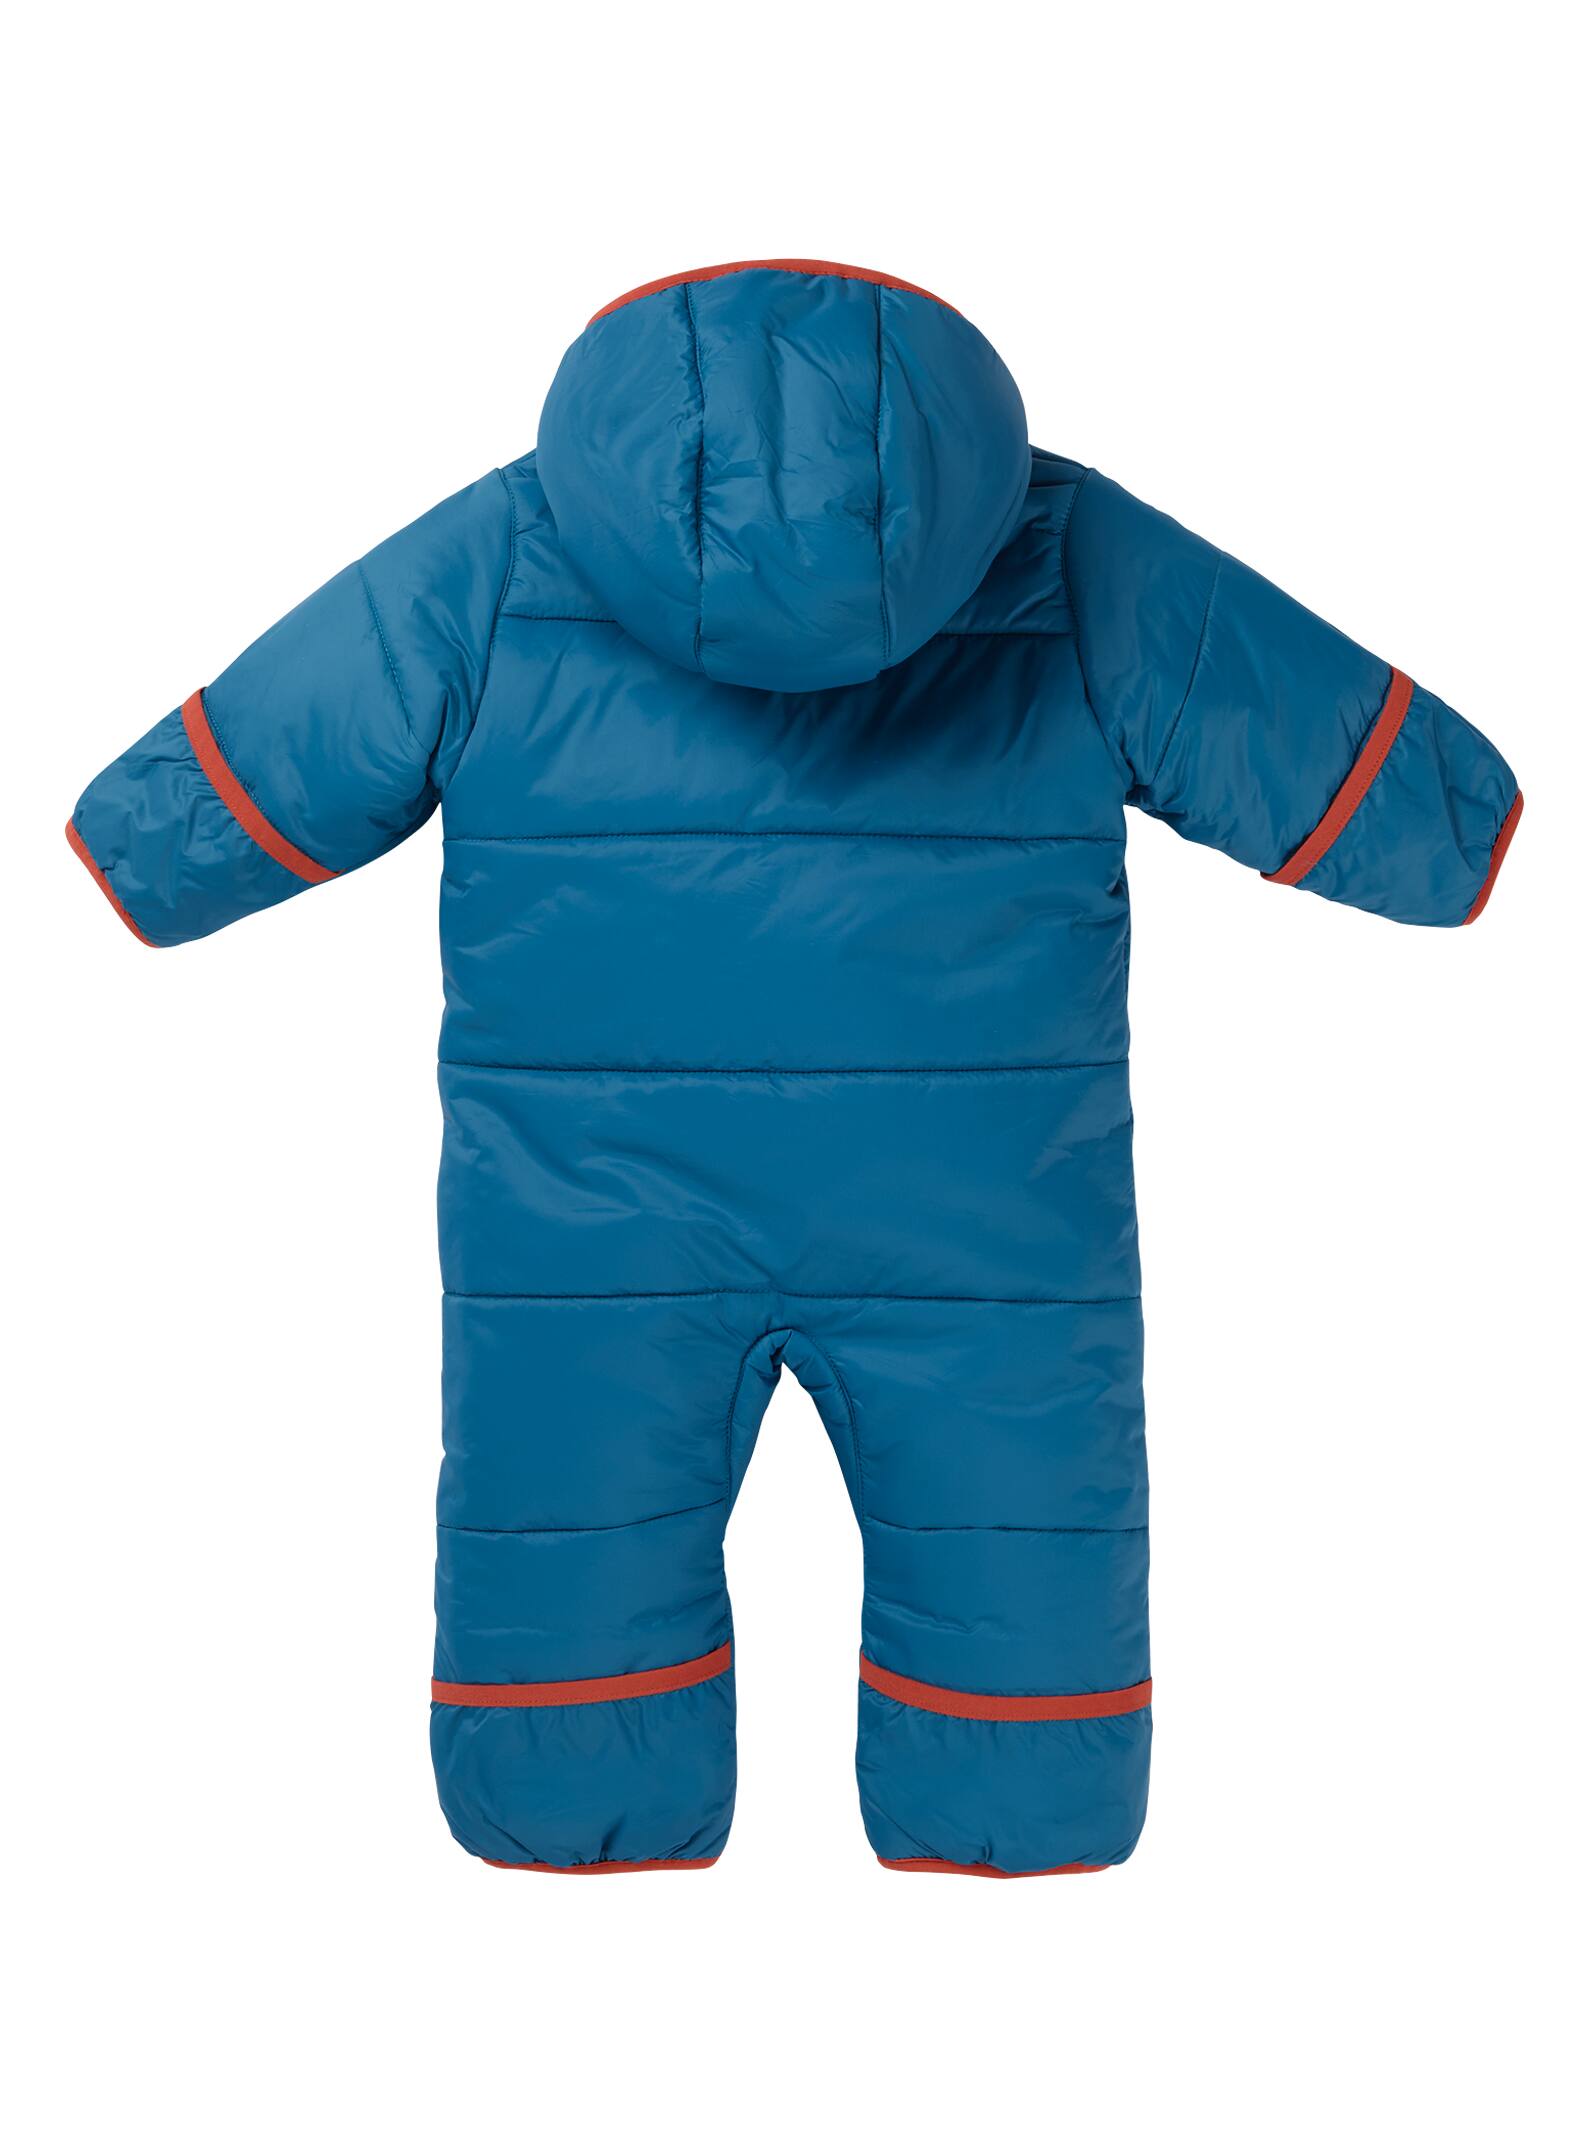 Details about   Burton Buddy Bunting Kleinkind-Winteranzug Baby Sleeping Bag Baby Suit Overall